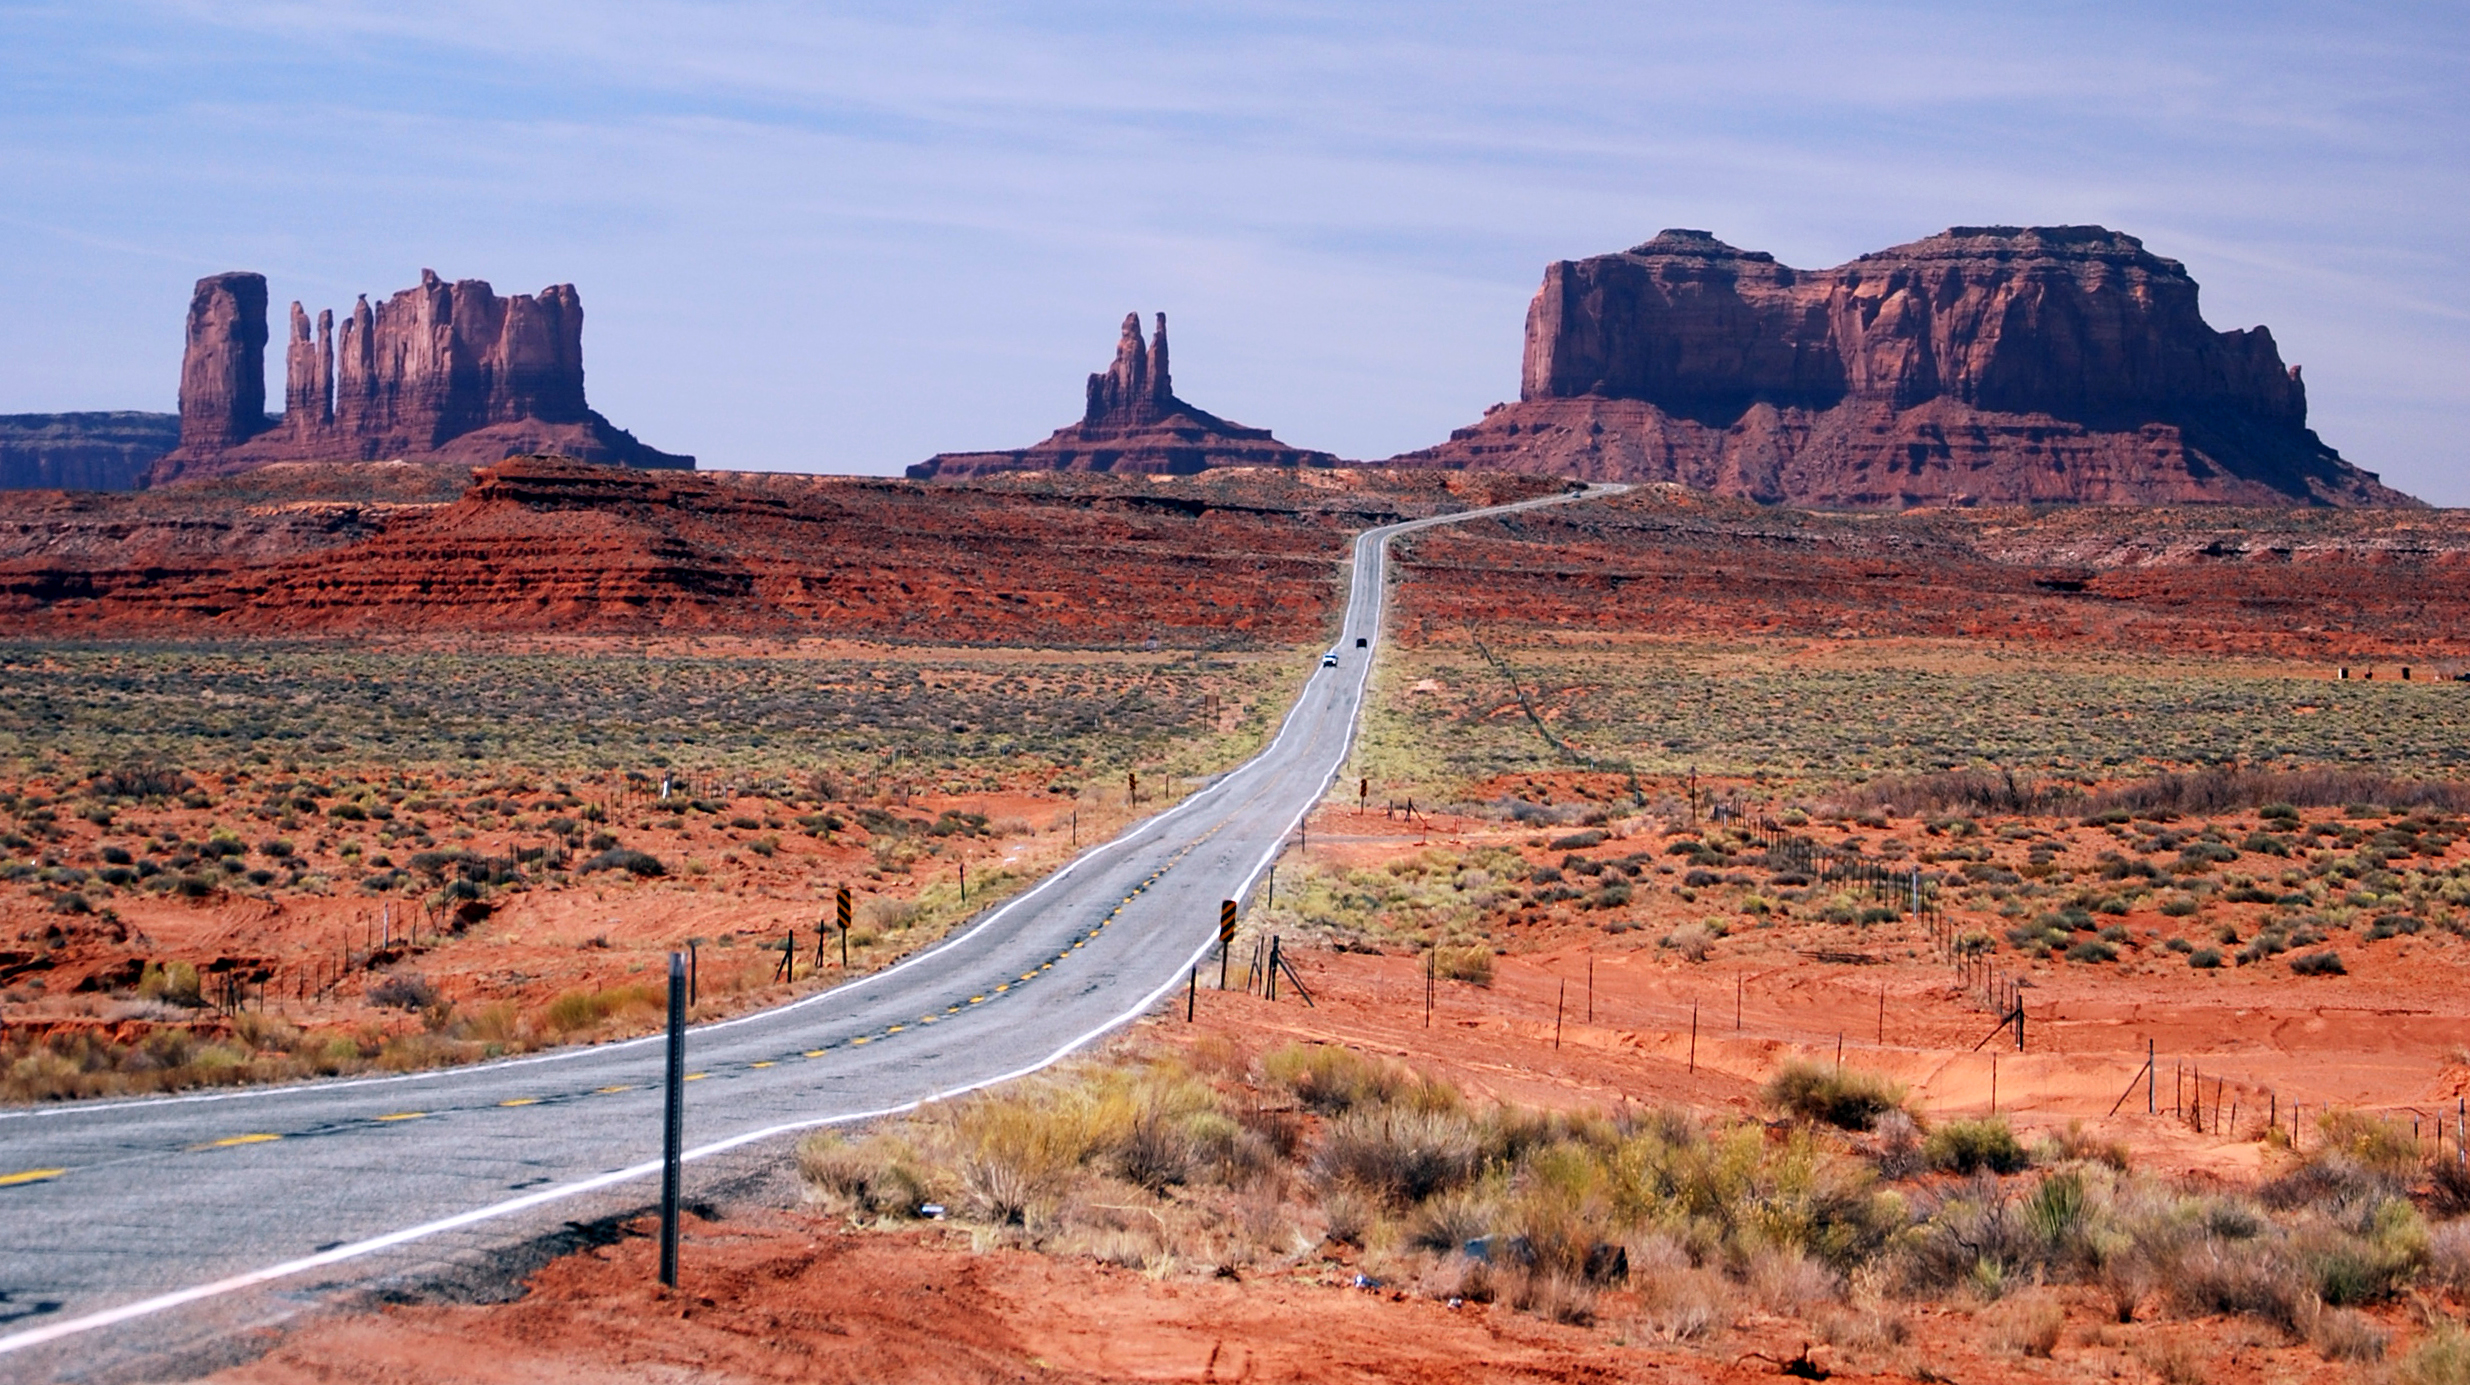 Desert road photo